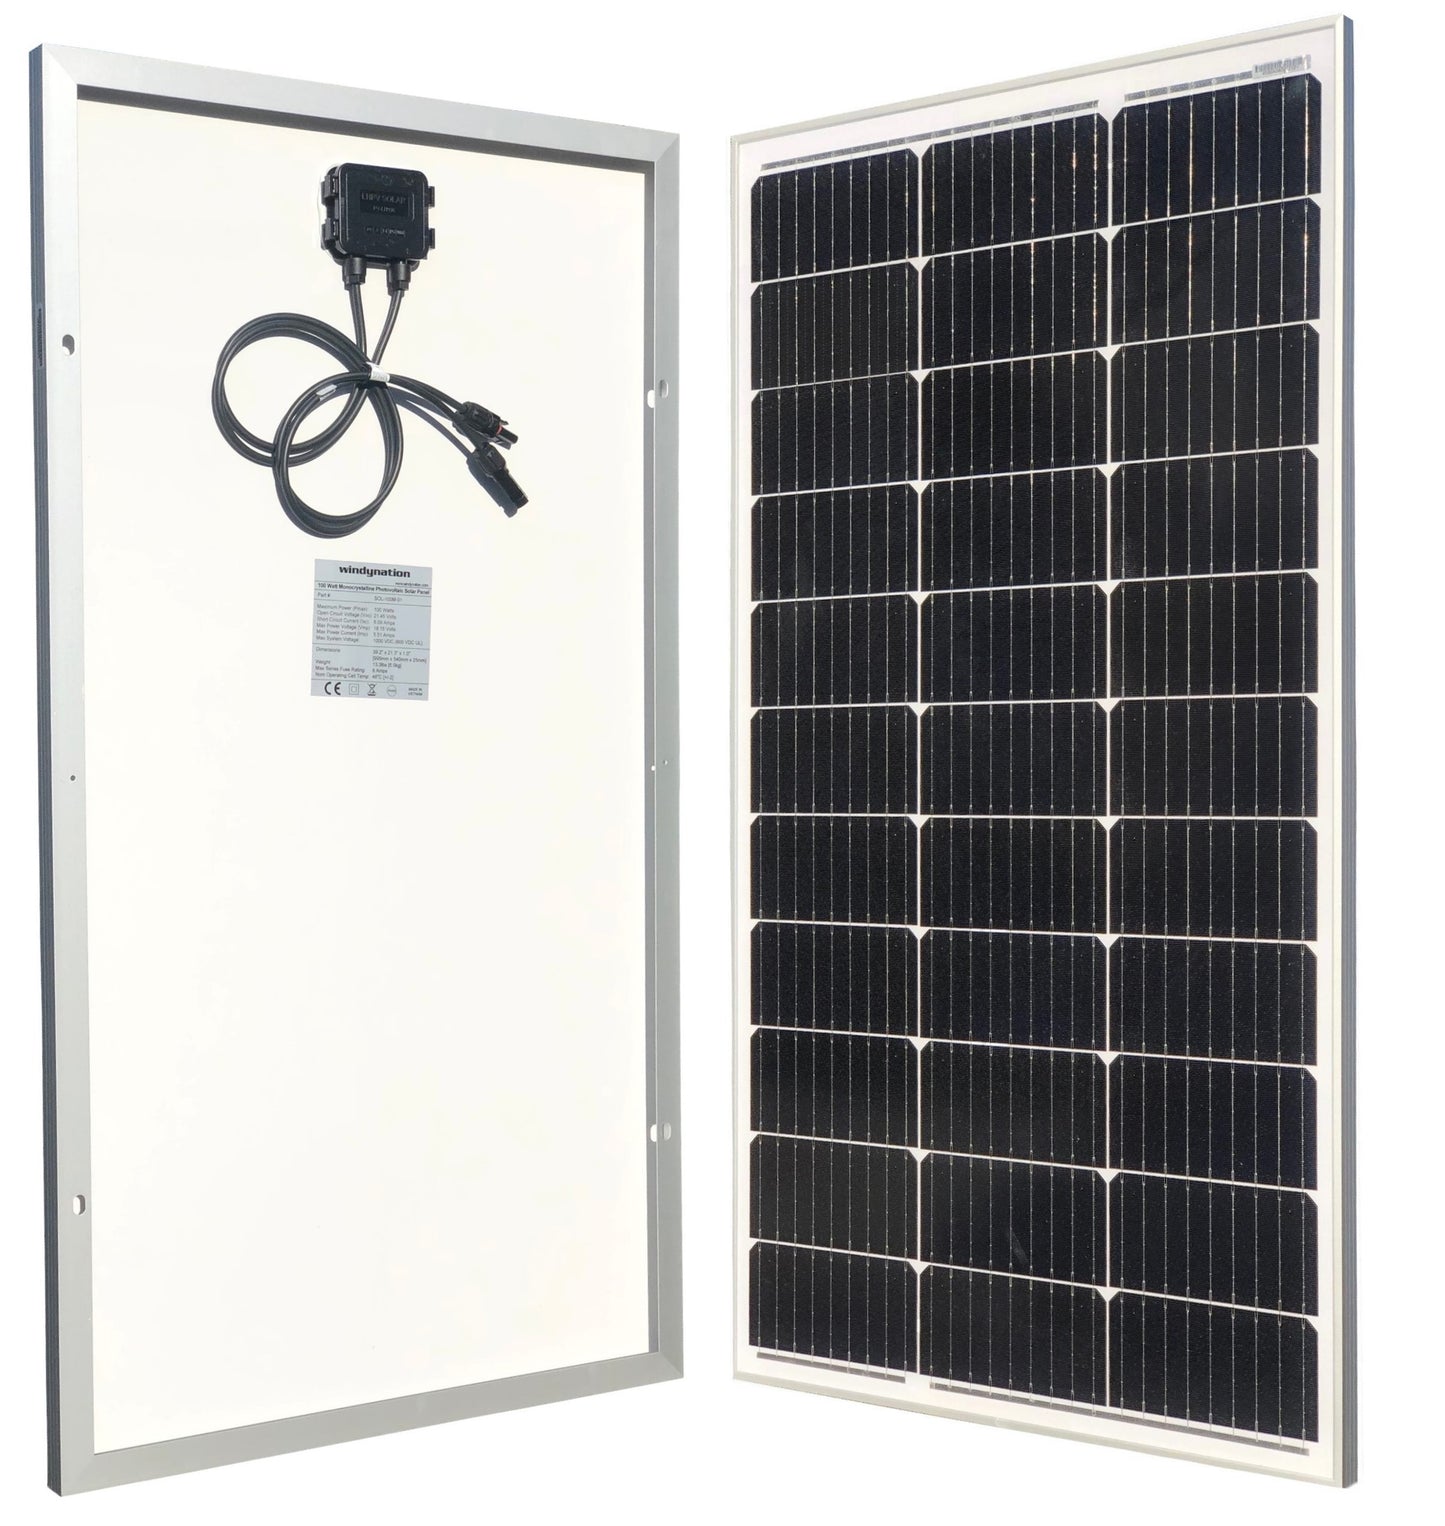 200-Watt Monocrystalline Solar Panel Kits with TrakMax MPPT 40A Charge Controller